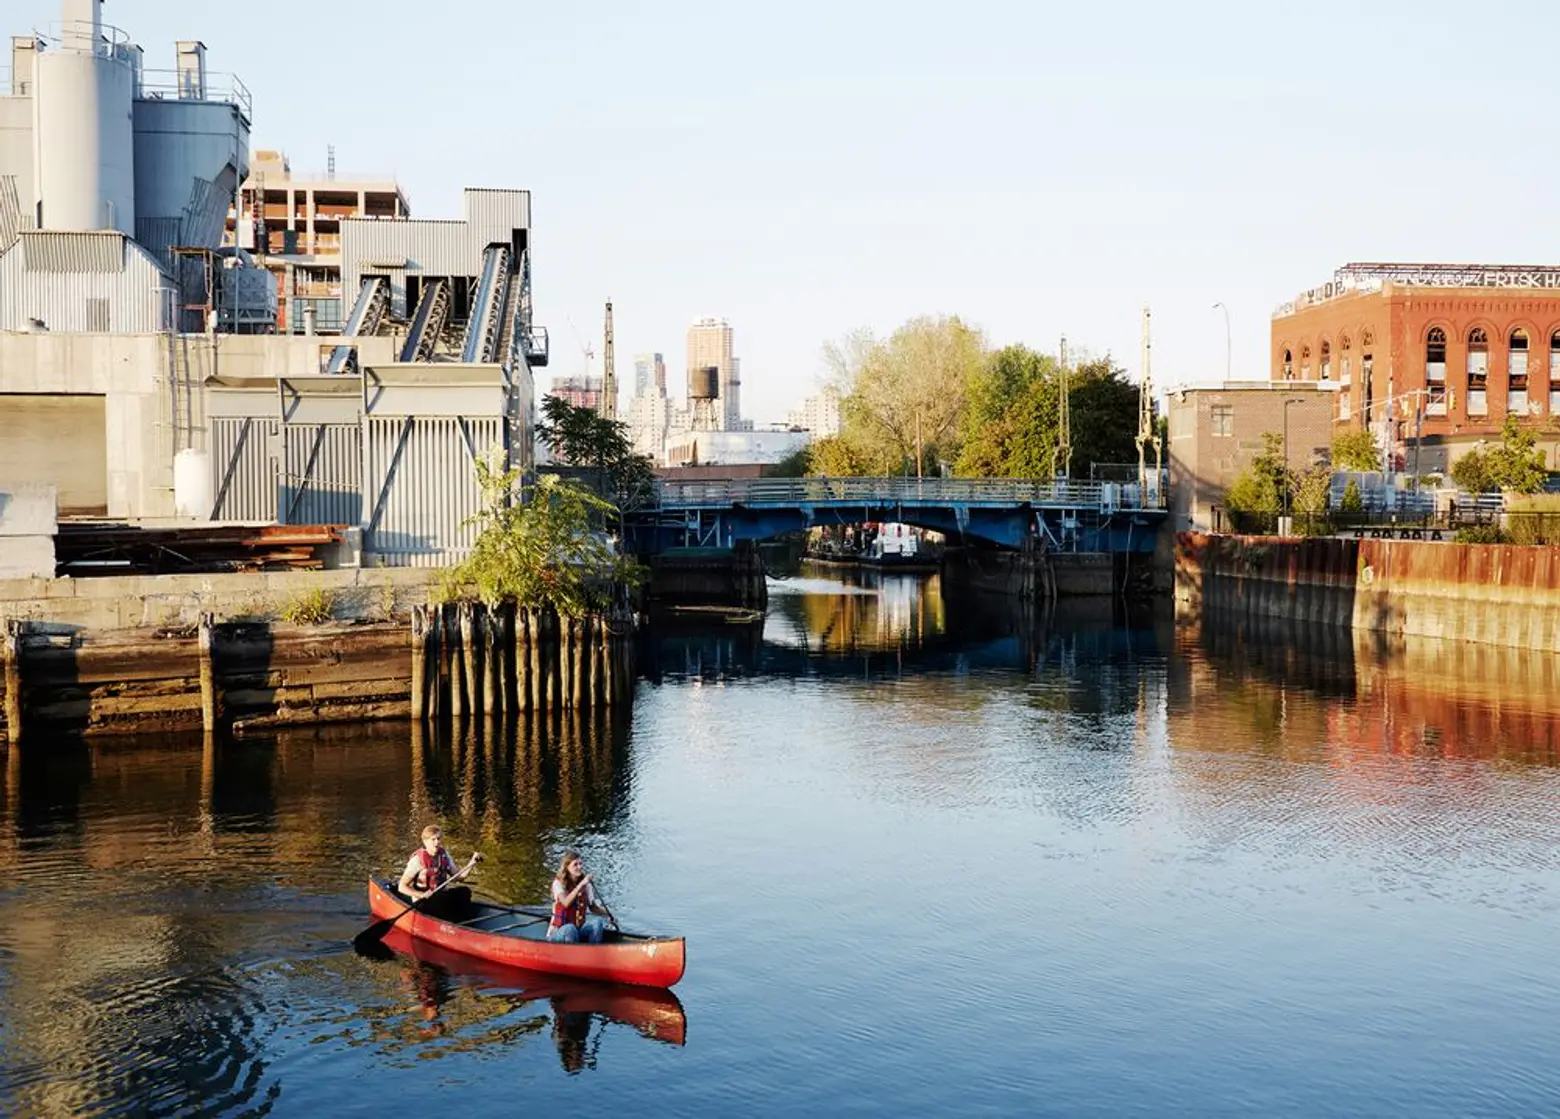 City eyes Gowanus Canal as the next ‘Little Venice’